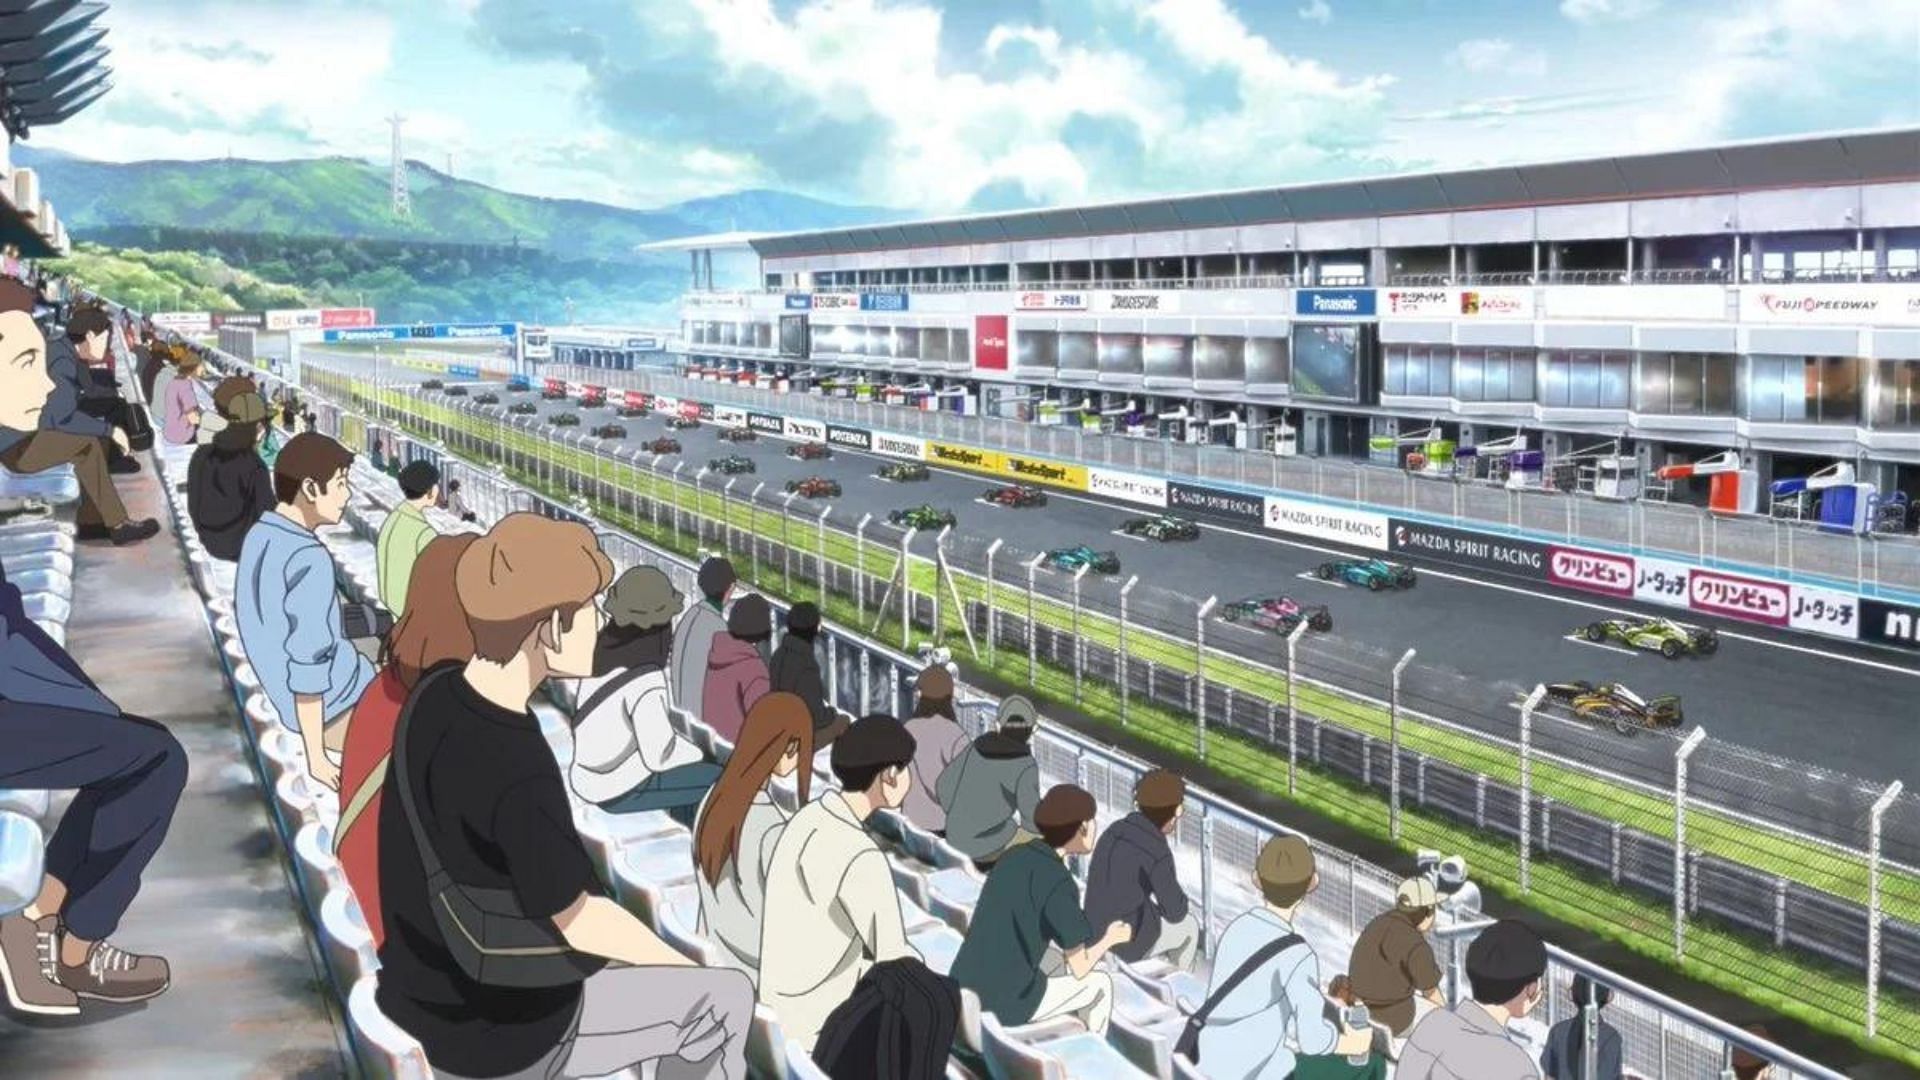 F4 racing as shown in anime (Image via Studio Troyca)